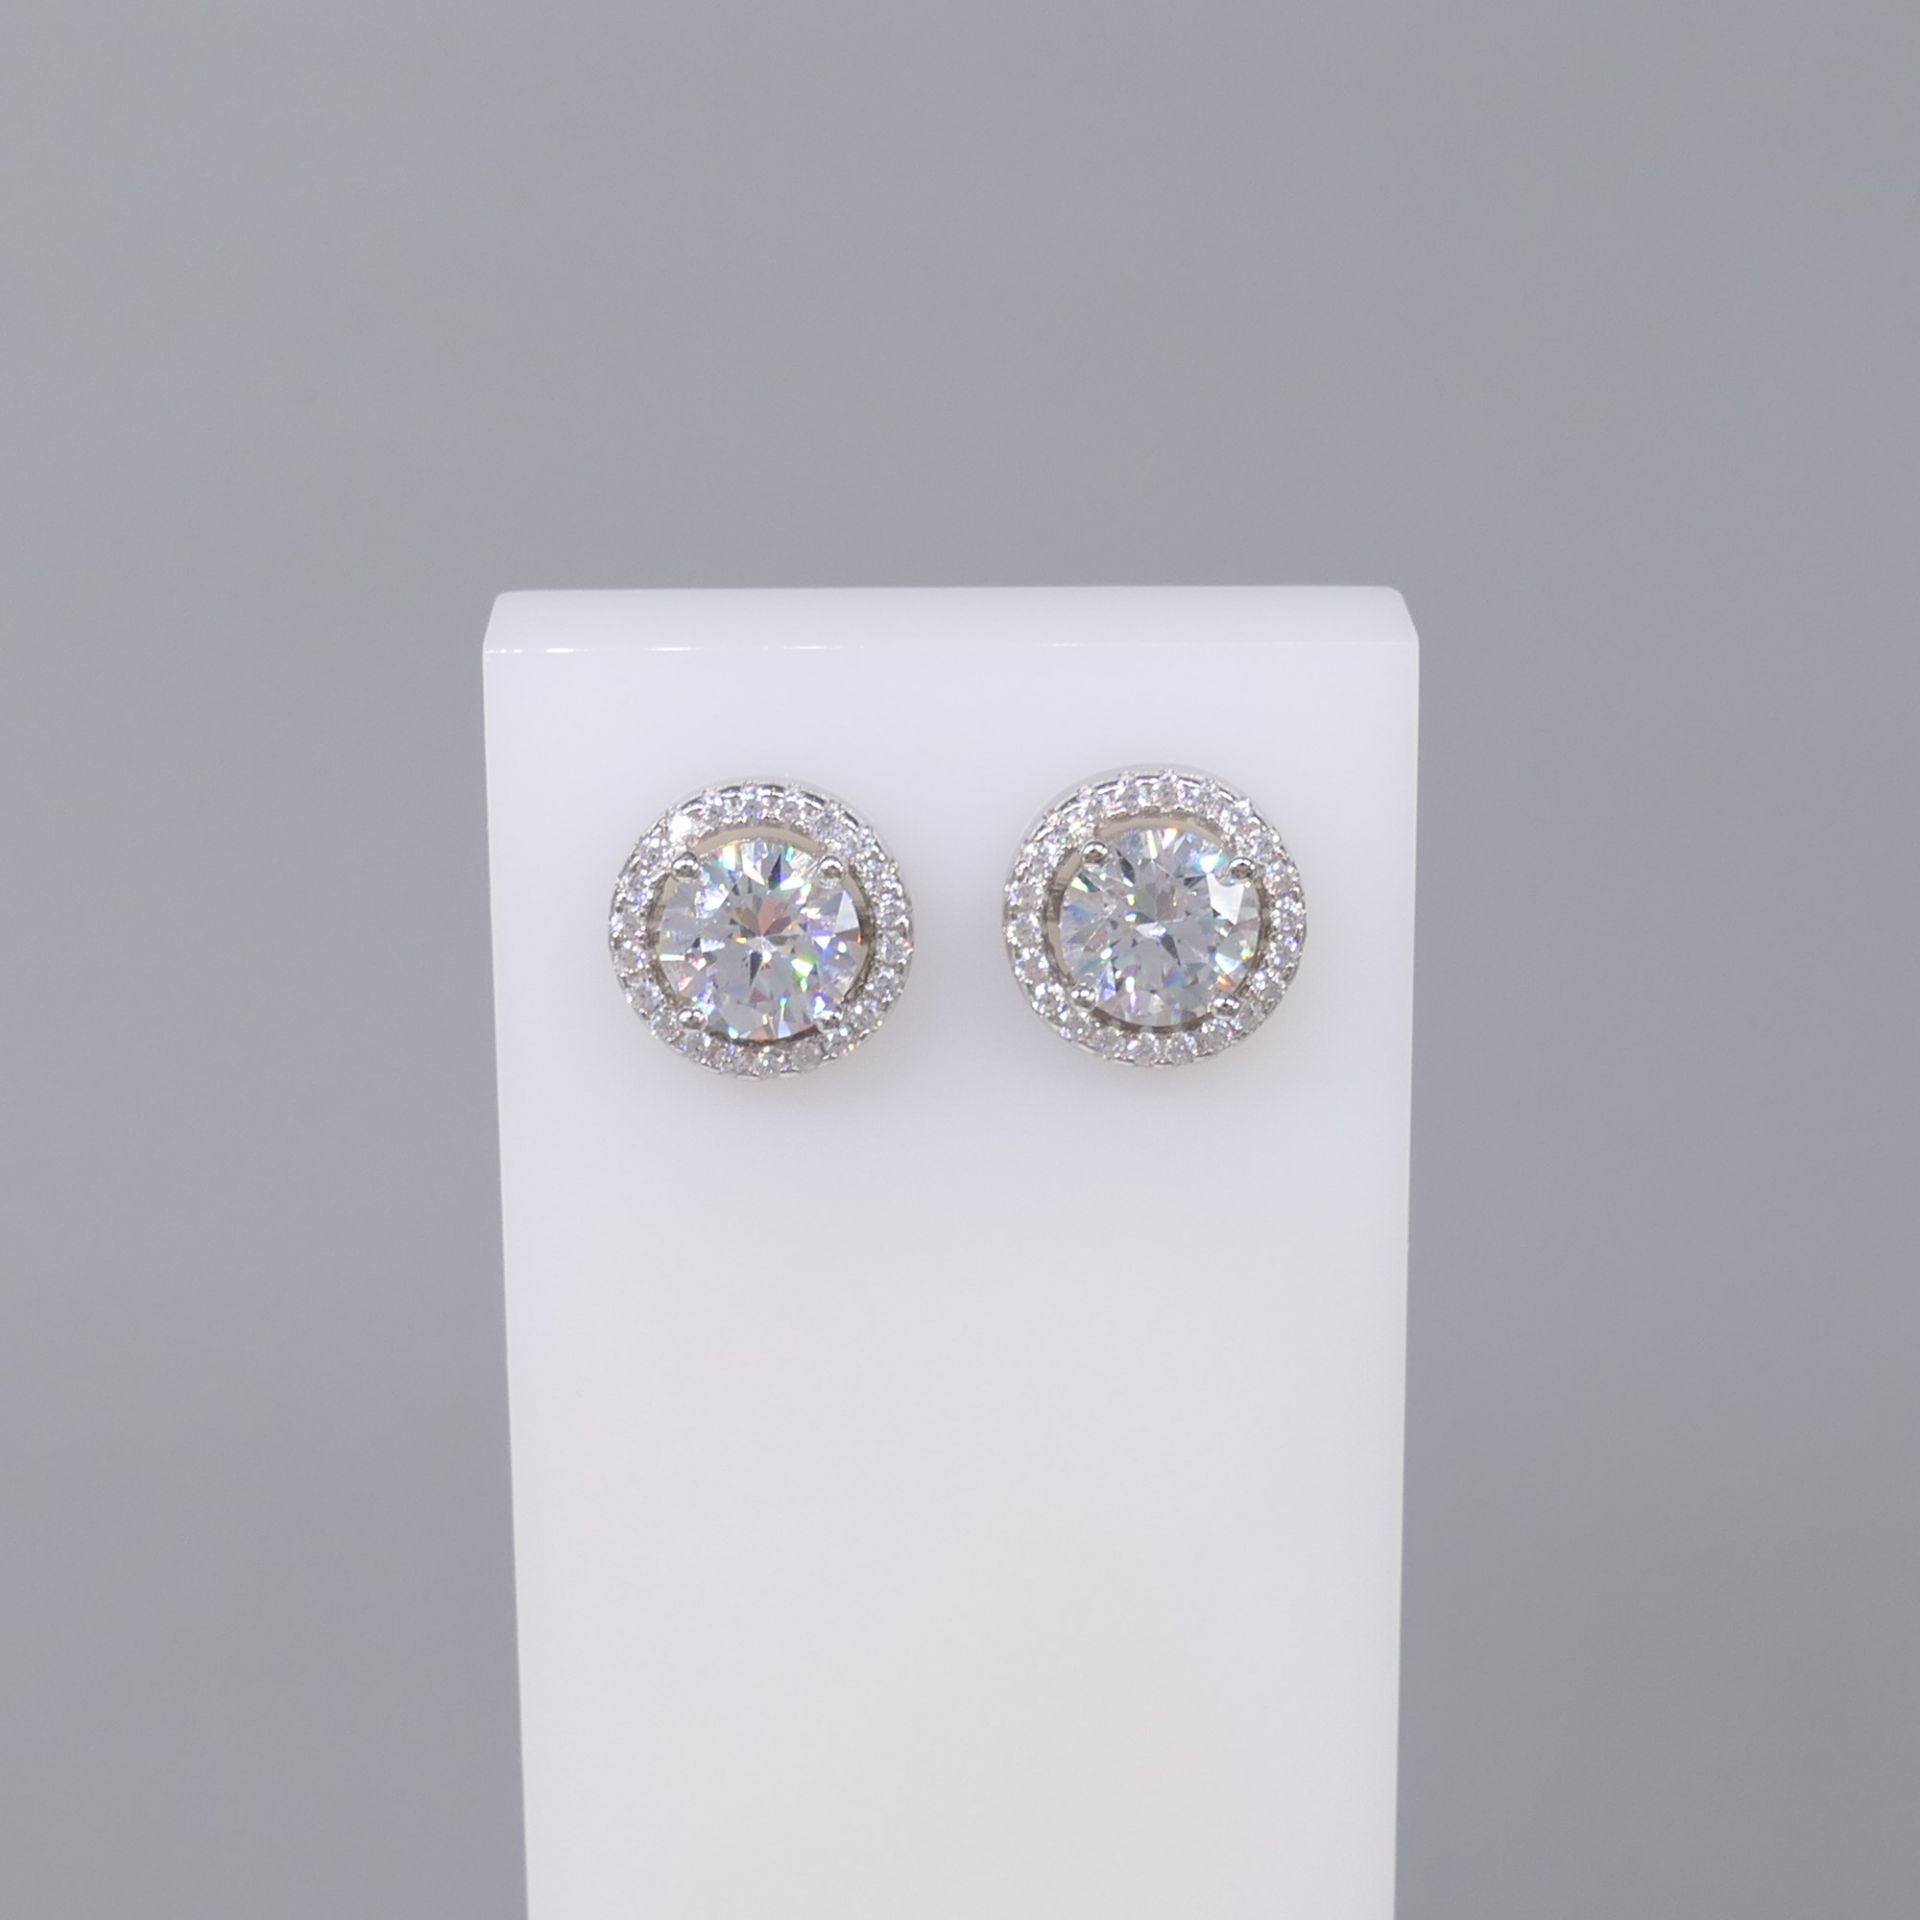 Pair of sterling silver halo stud earrings - Image 5 of 5